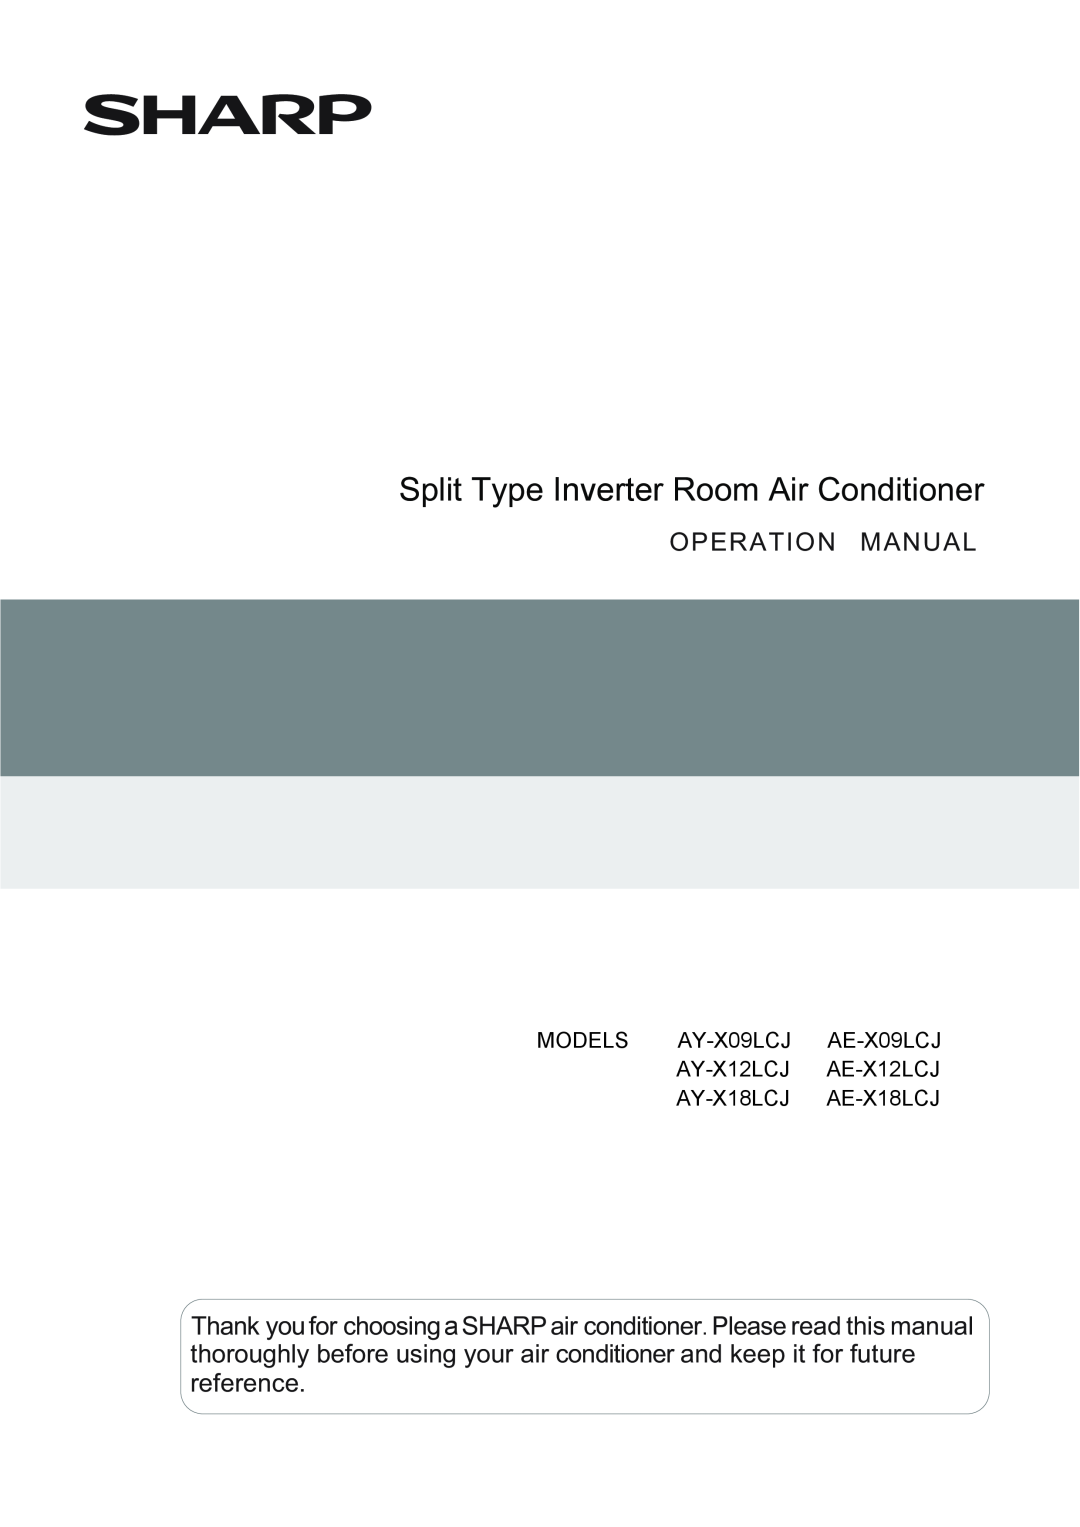 Sharp AE-X12LCJ operation manual Split Type Inverter Room Air Conditioner, MODELS AY-X09LCJ AY-X12LCJ AY-X18LCJ 